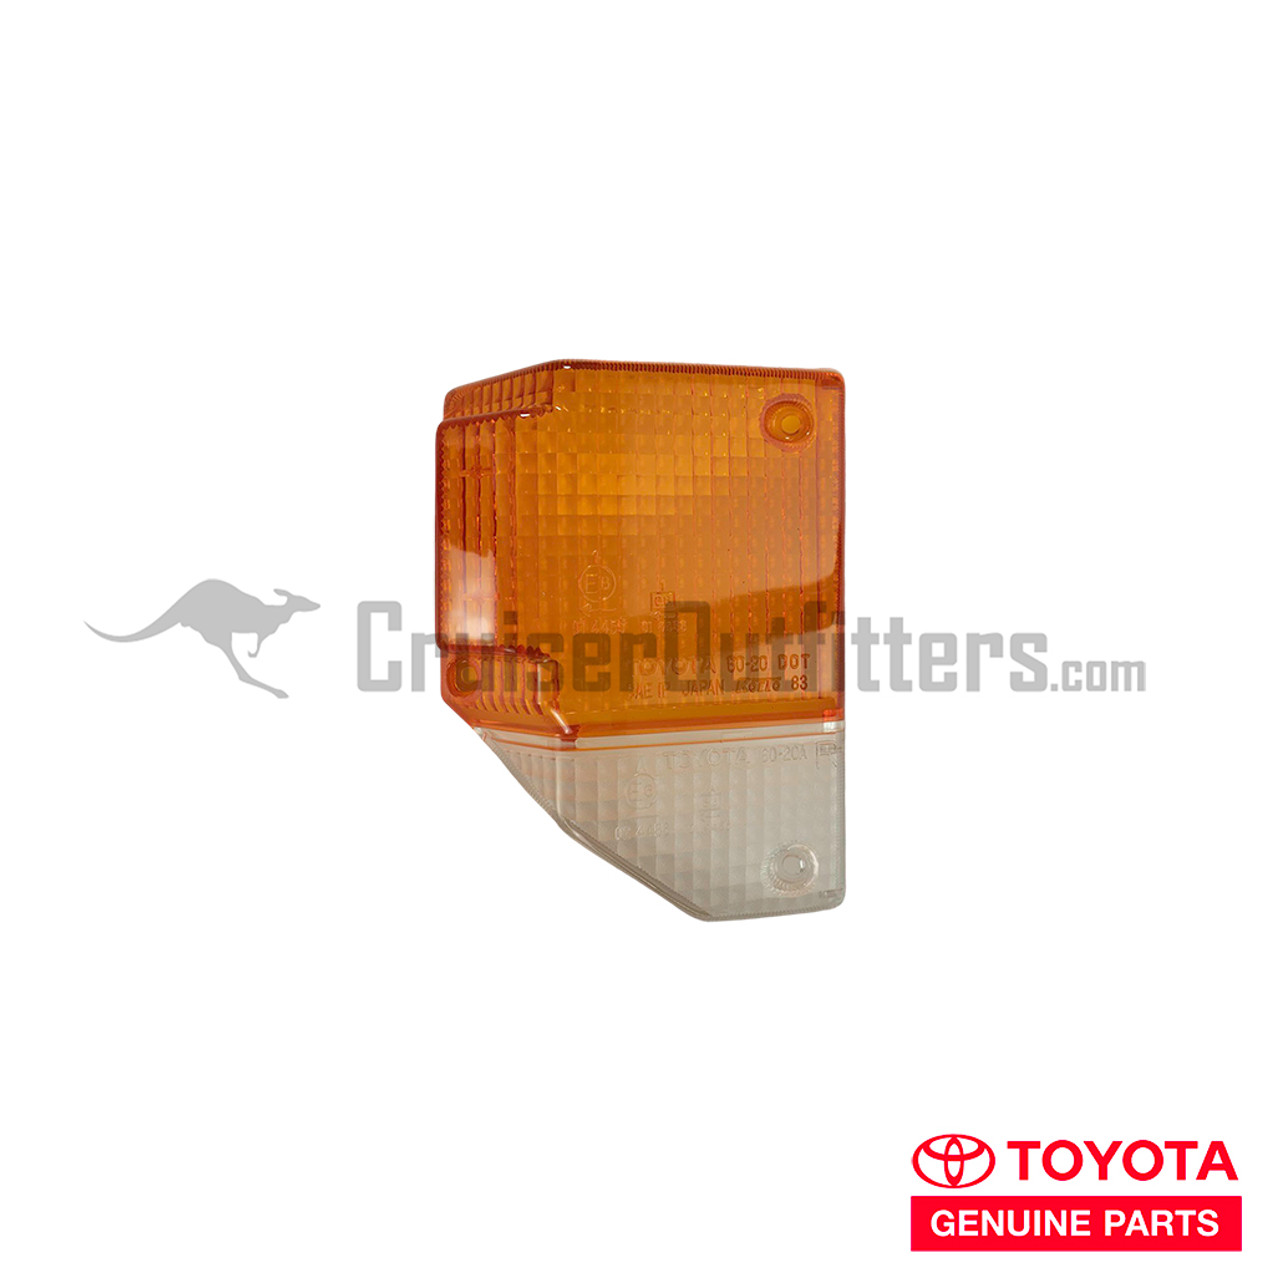 Turn Signal Lens - OEM Toyota - RH - Fits 7x Series (LENSF70RH)